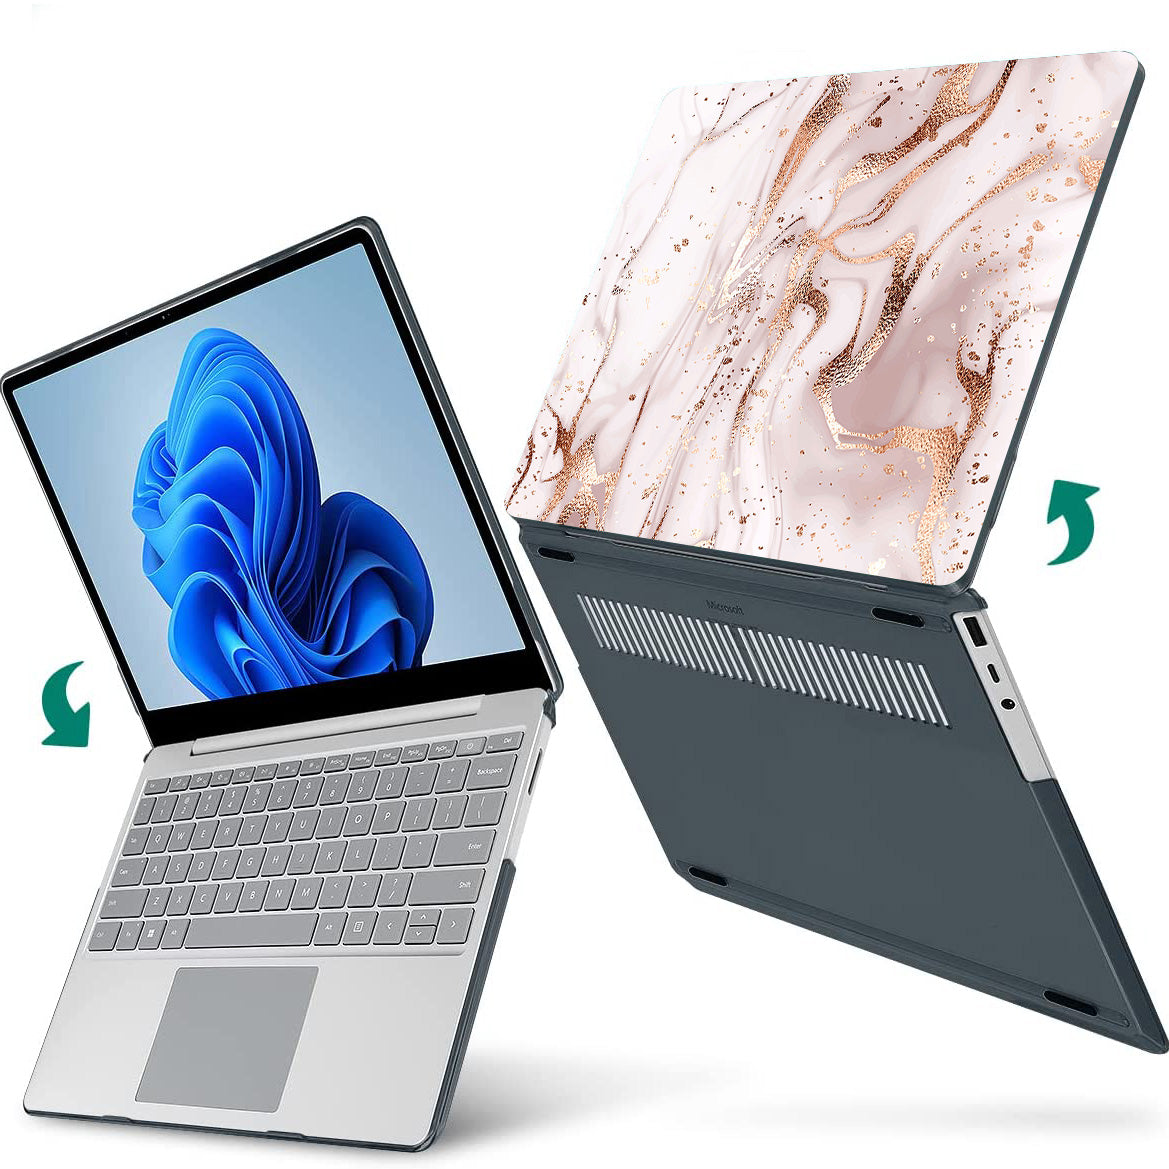 Rose River Microsoft Surface Laptop Case